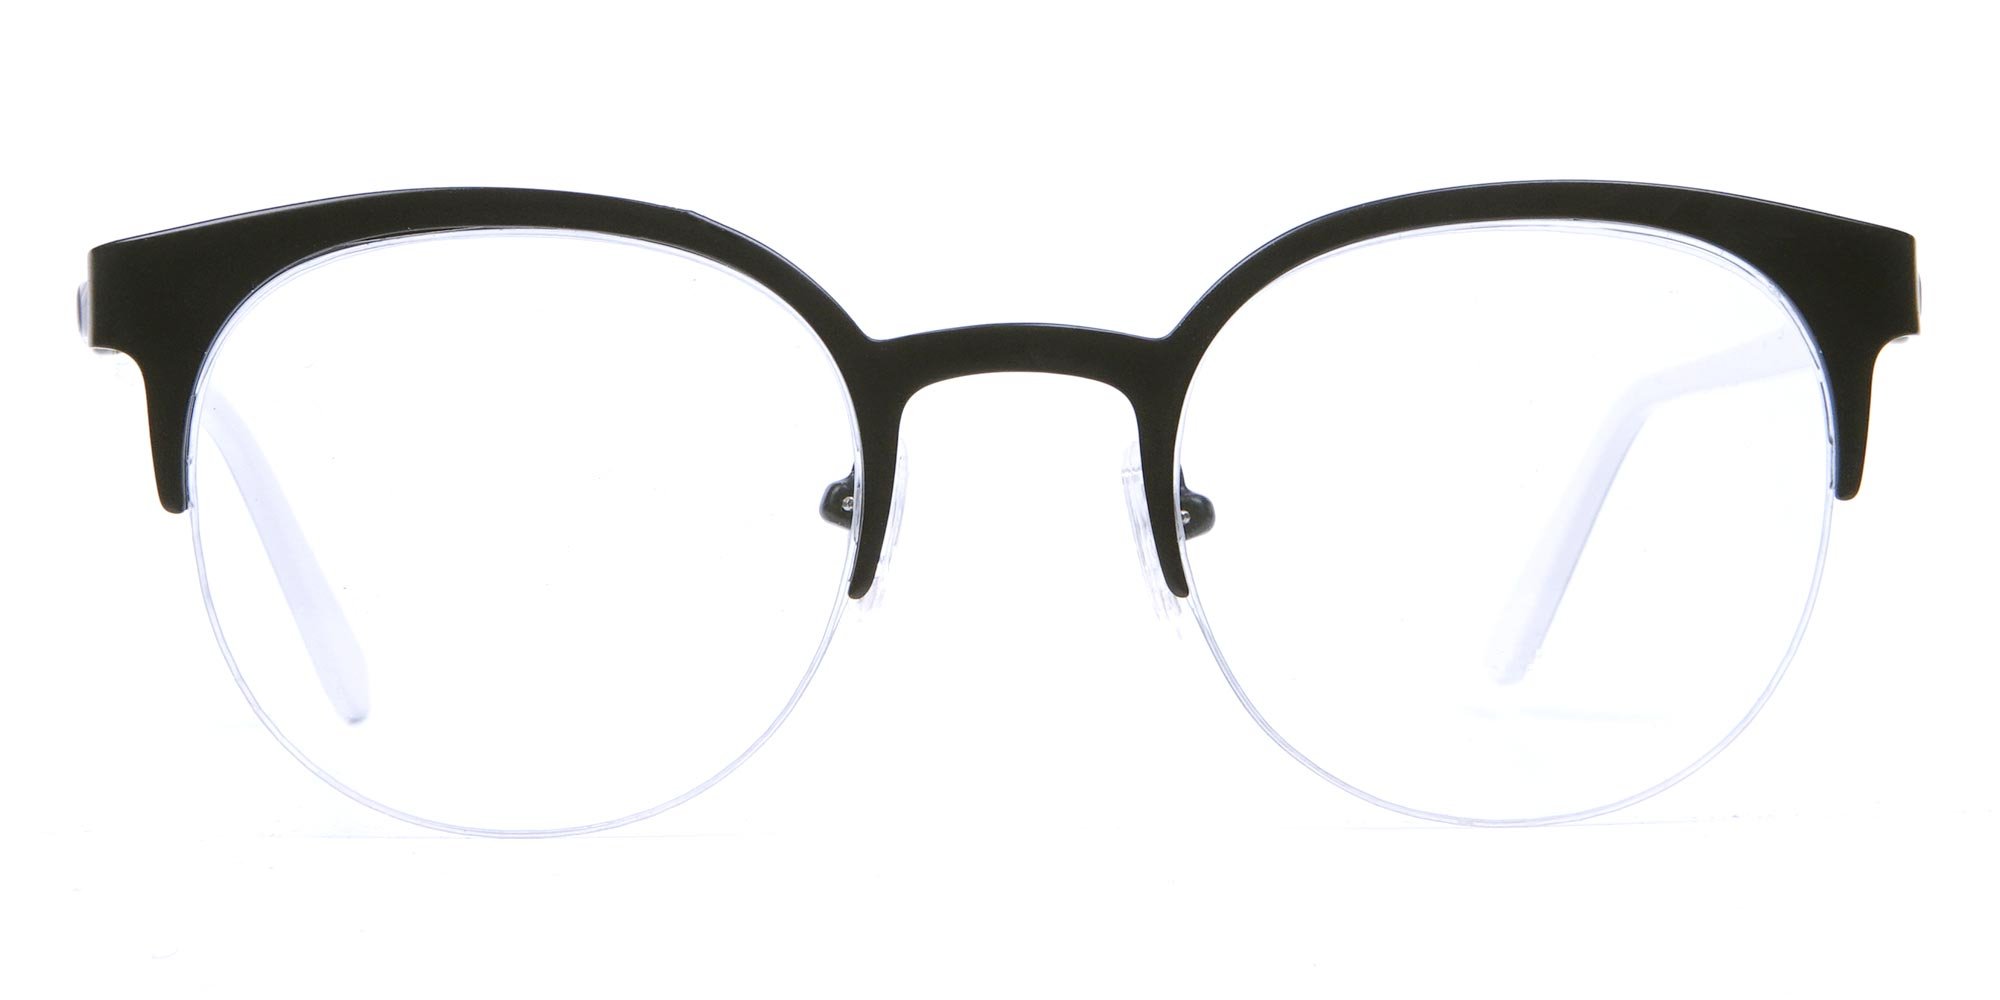  Matte Black Browline Glasses in Half-Rim Frame, Hipster Glasses